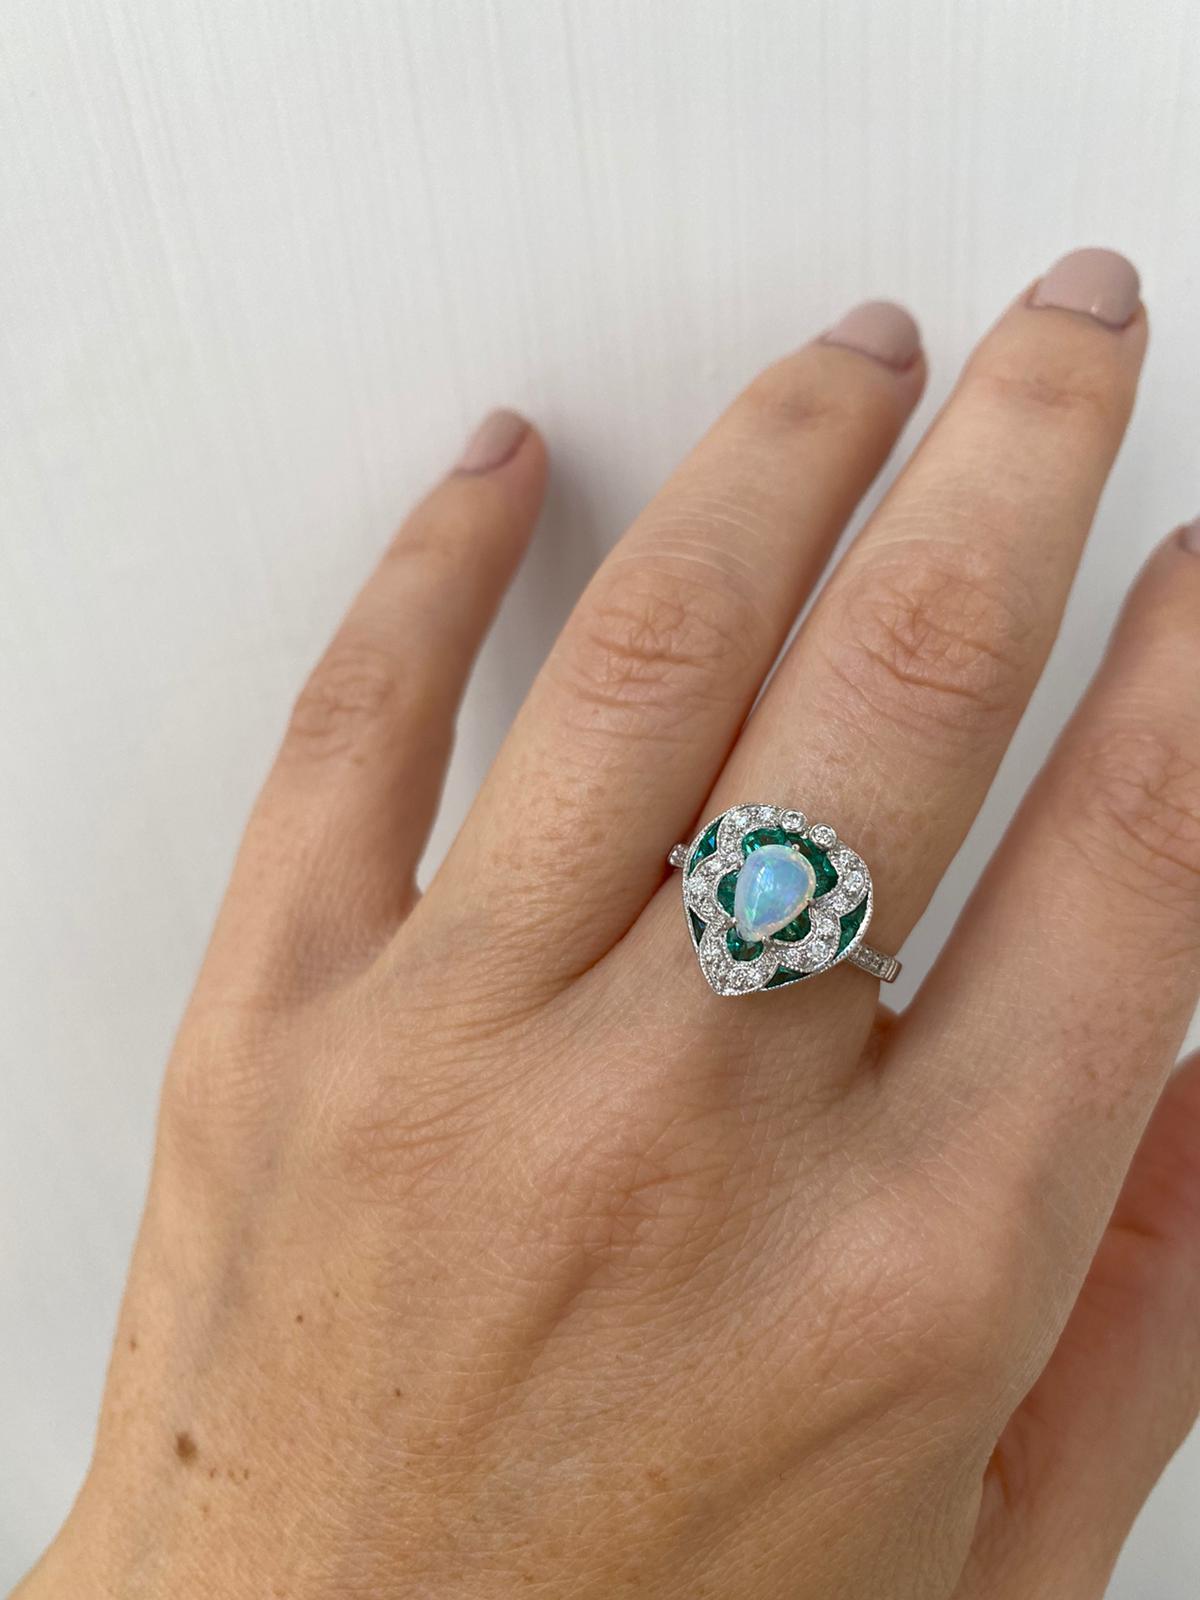 Art Deco Style Opal Diamond Emerald Cocktail Ring Estate Fine Jewelry 10